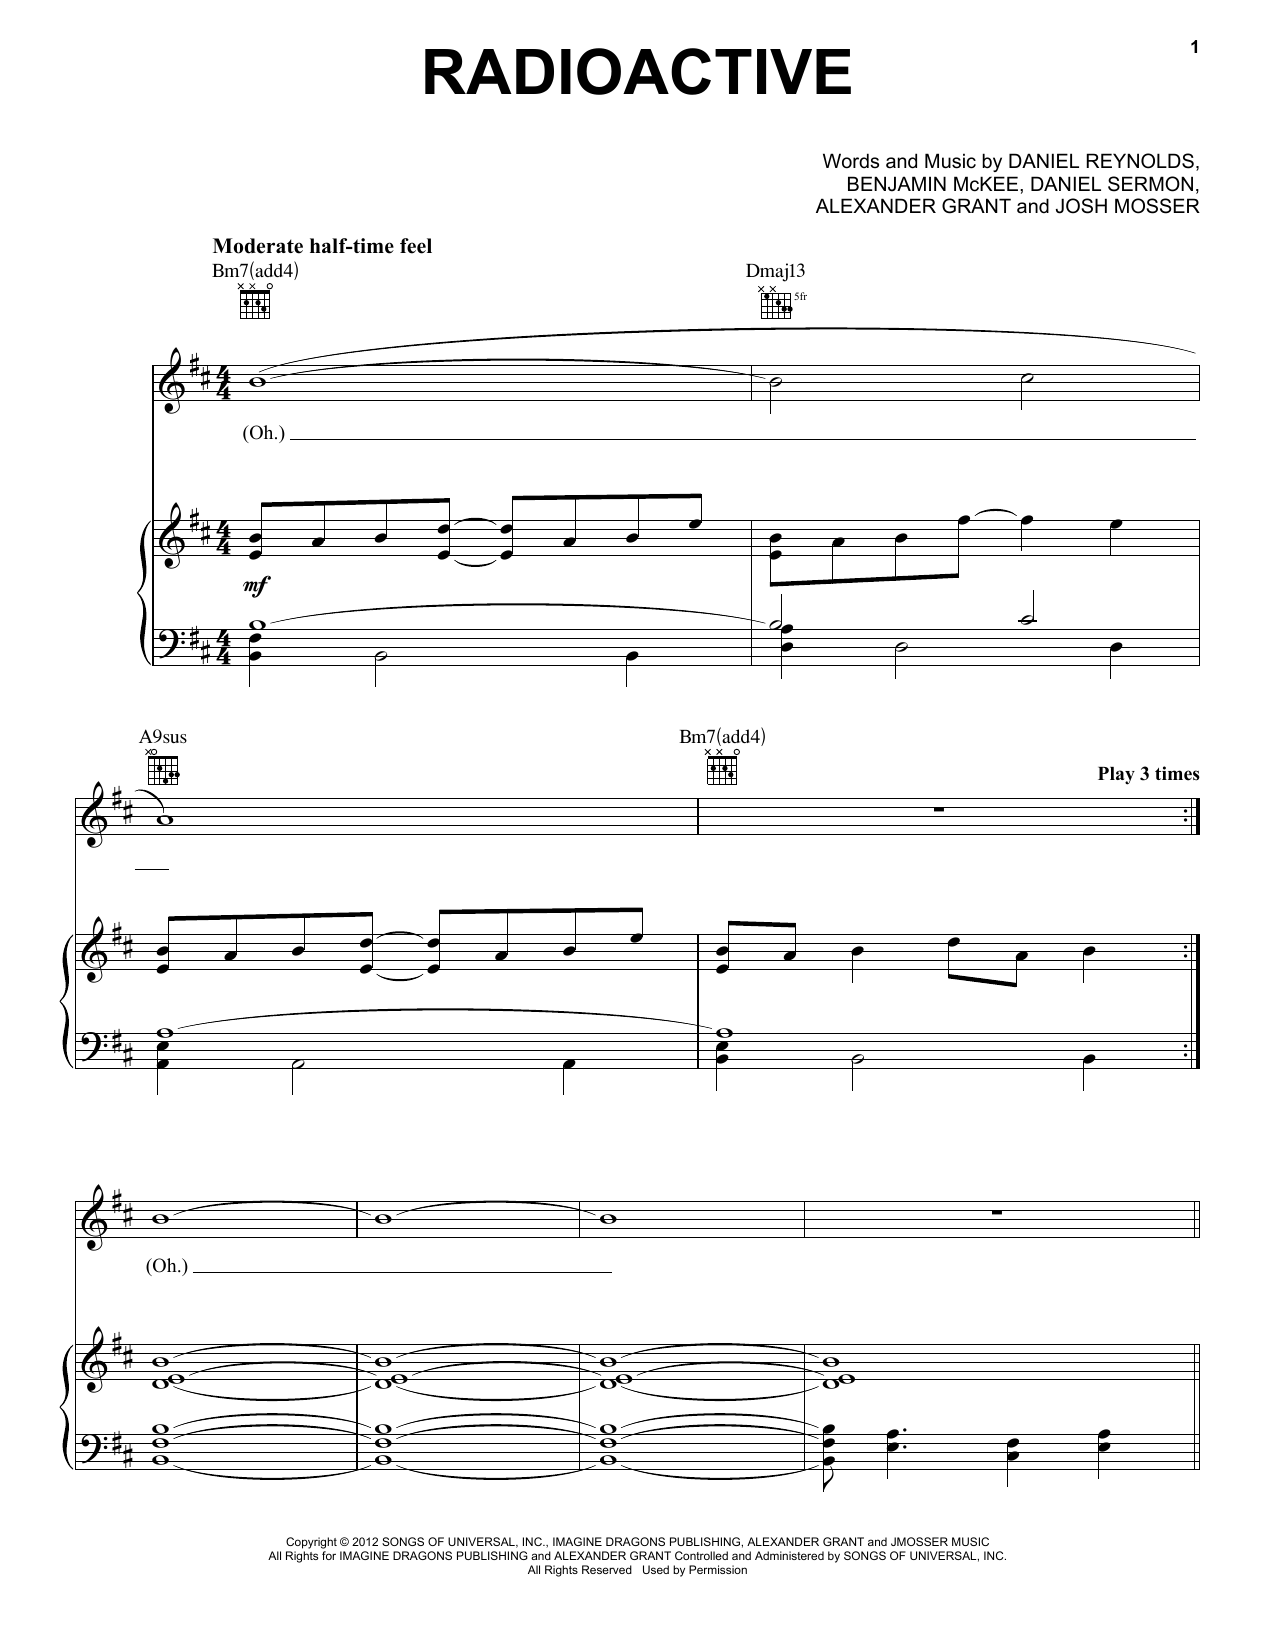 Imagine Dragons Radioactive Sheet Music Notes & Chords for Piano - Download or Print PDF